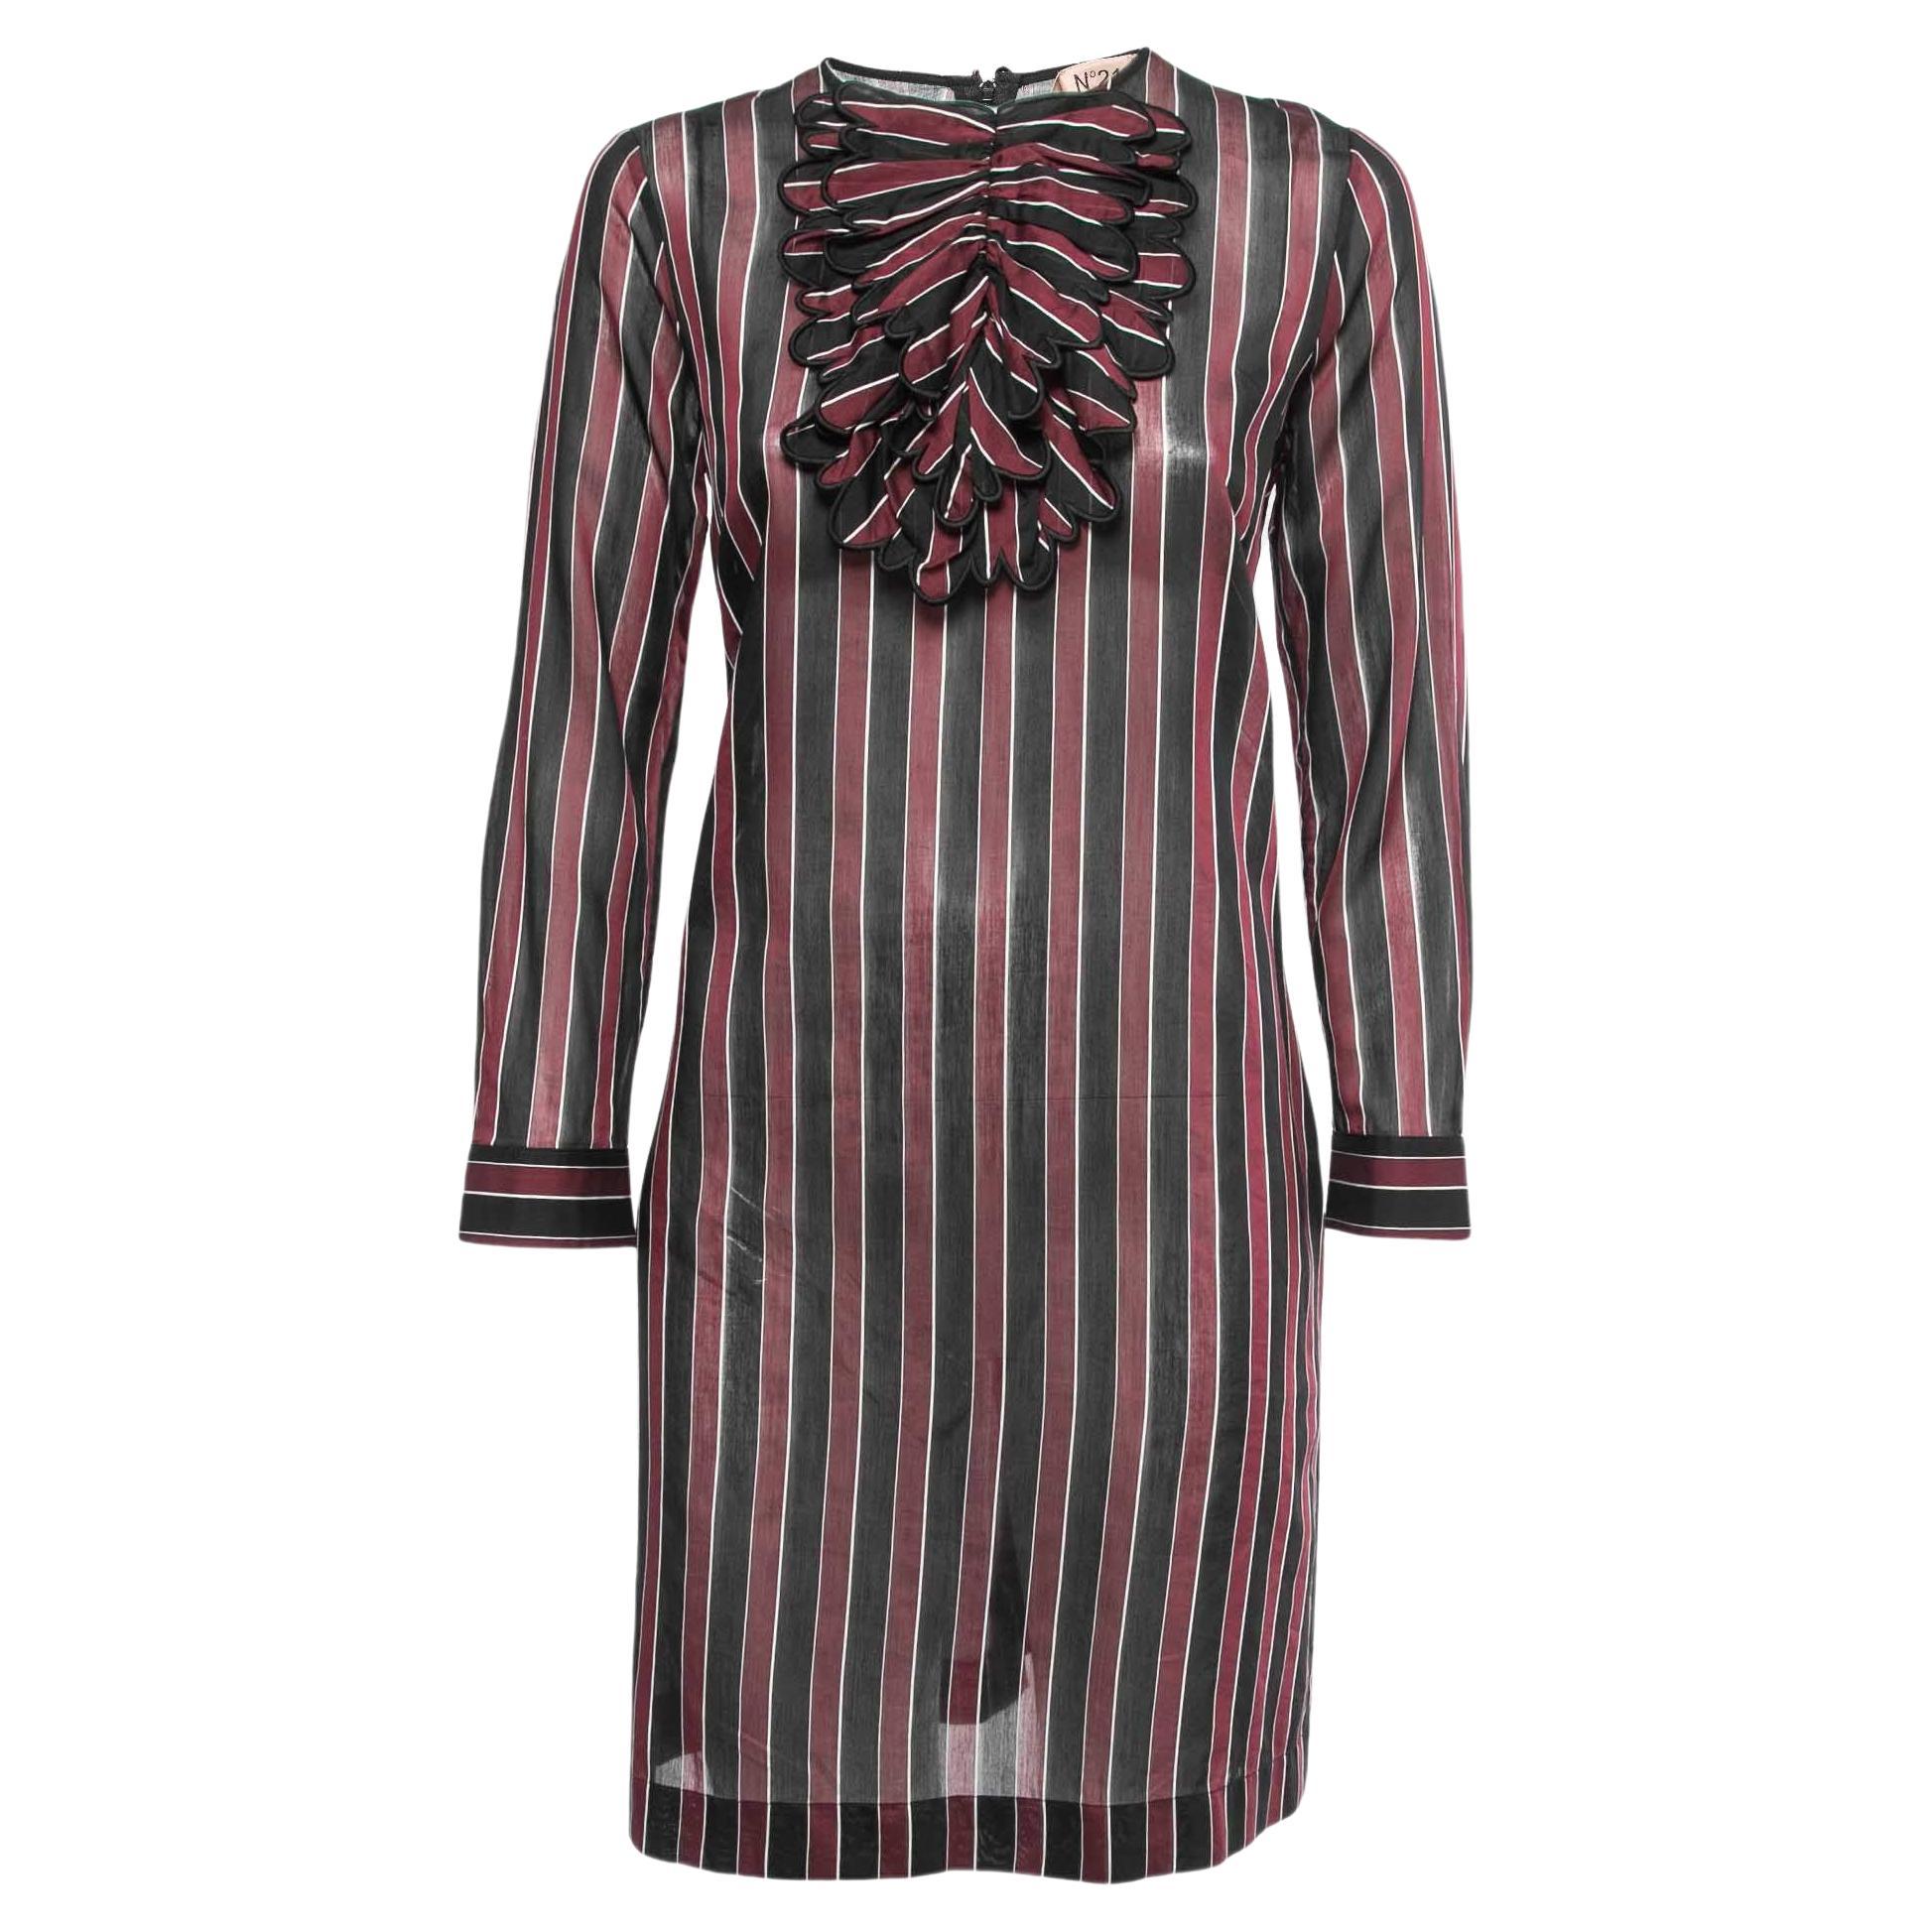 N21 Burgundy/Black Striped Cotton Blend Long Sleeve Short Dress M For Sale